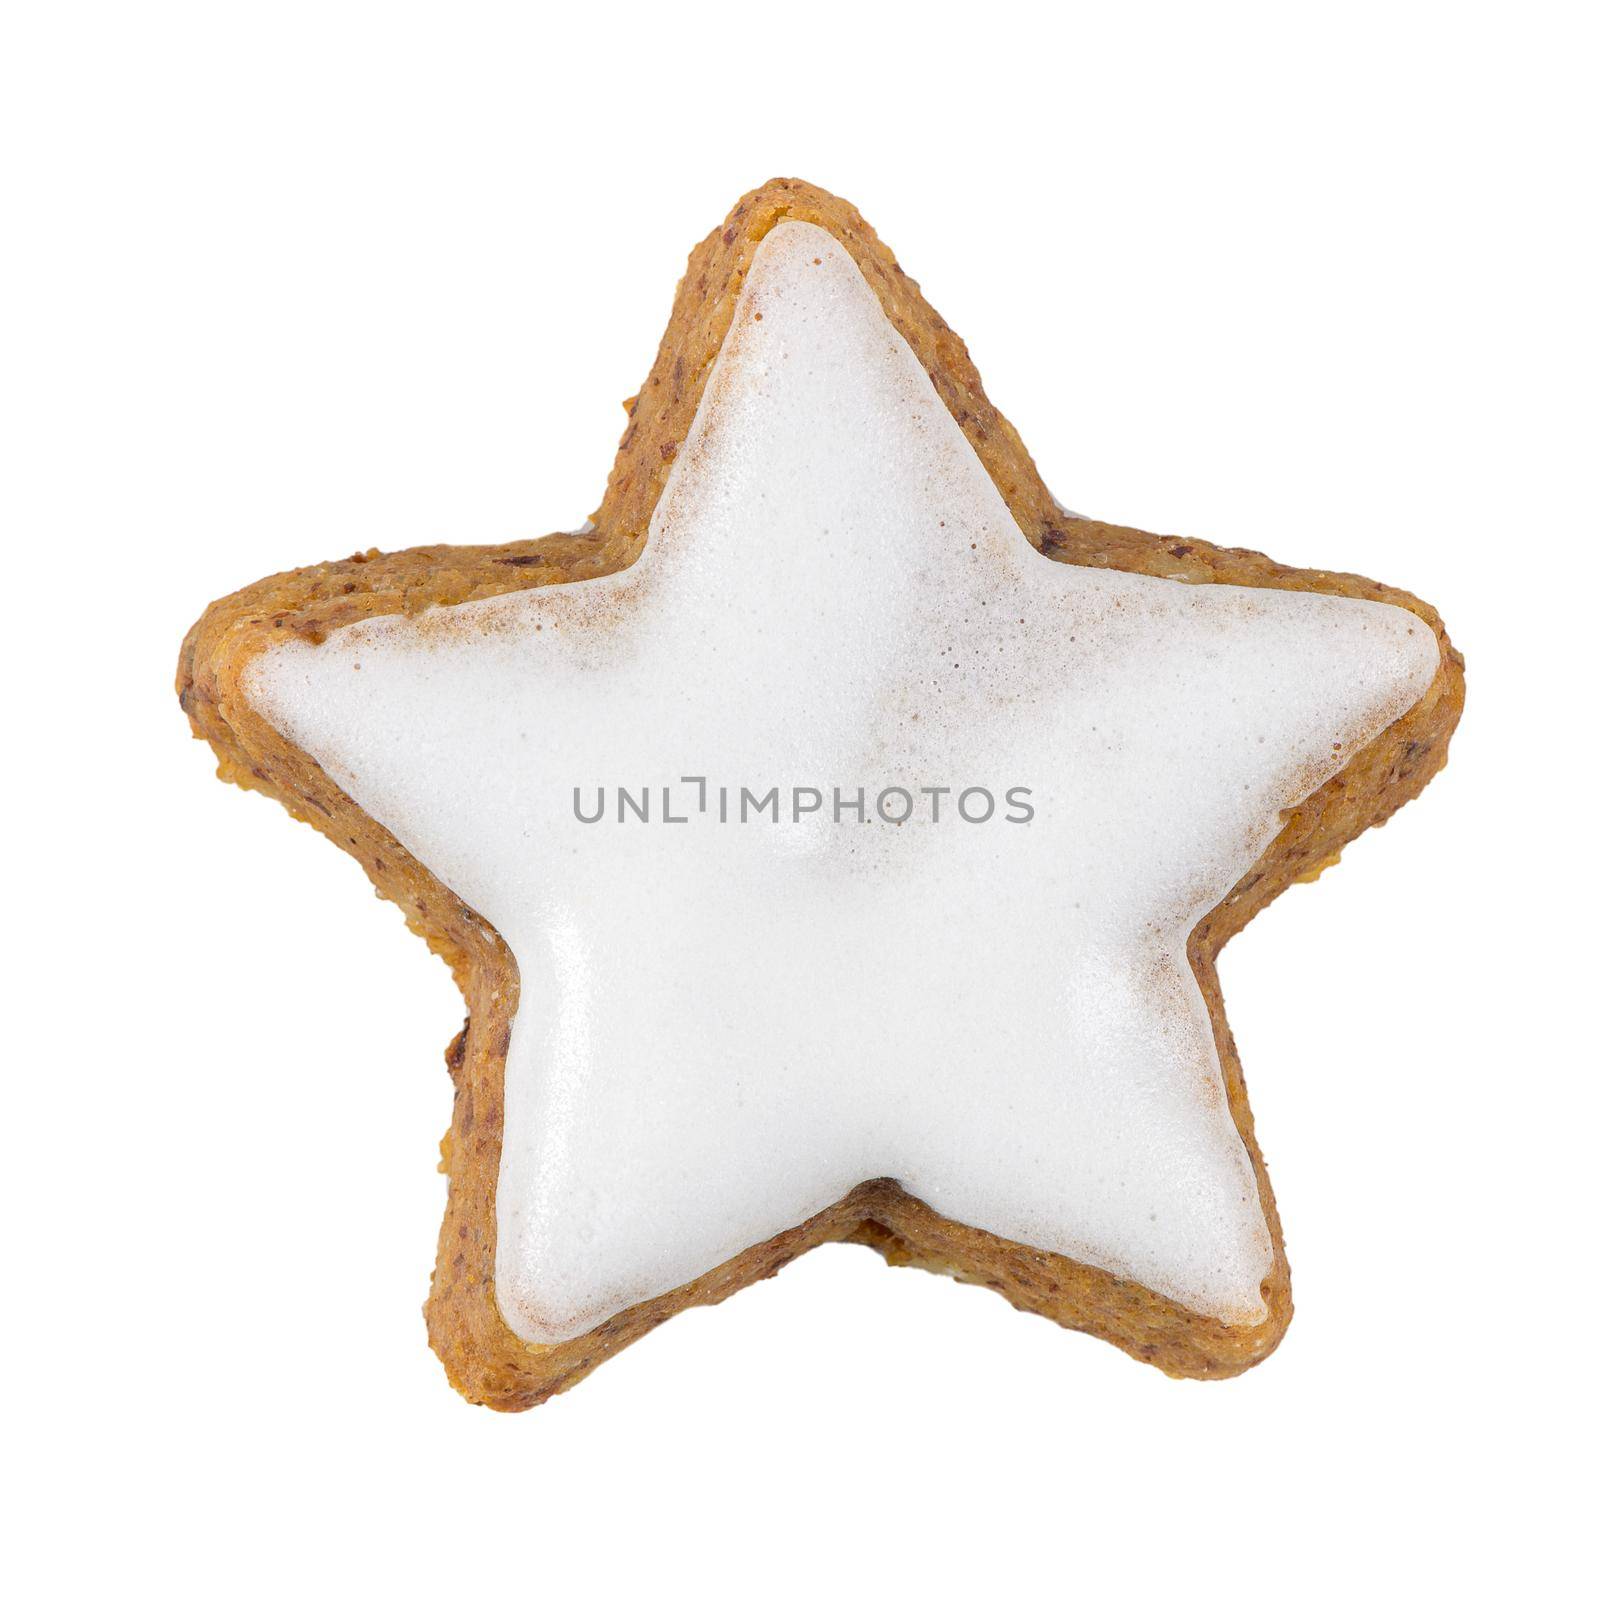 Cinnamon Star biscuit by homydesign